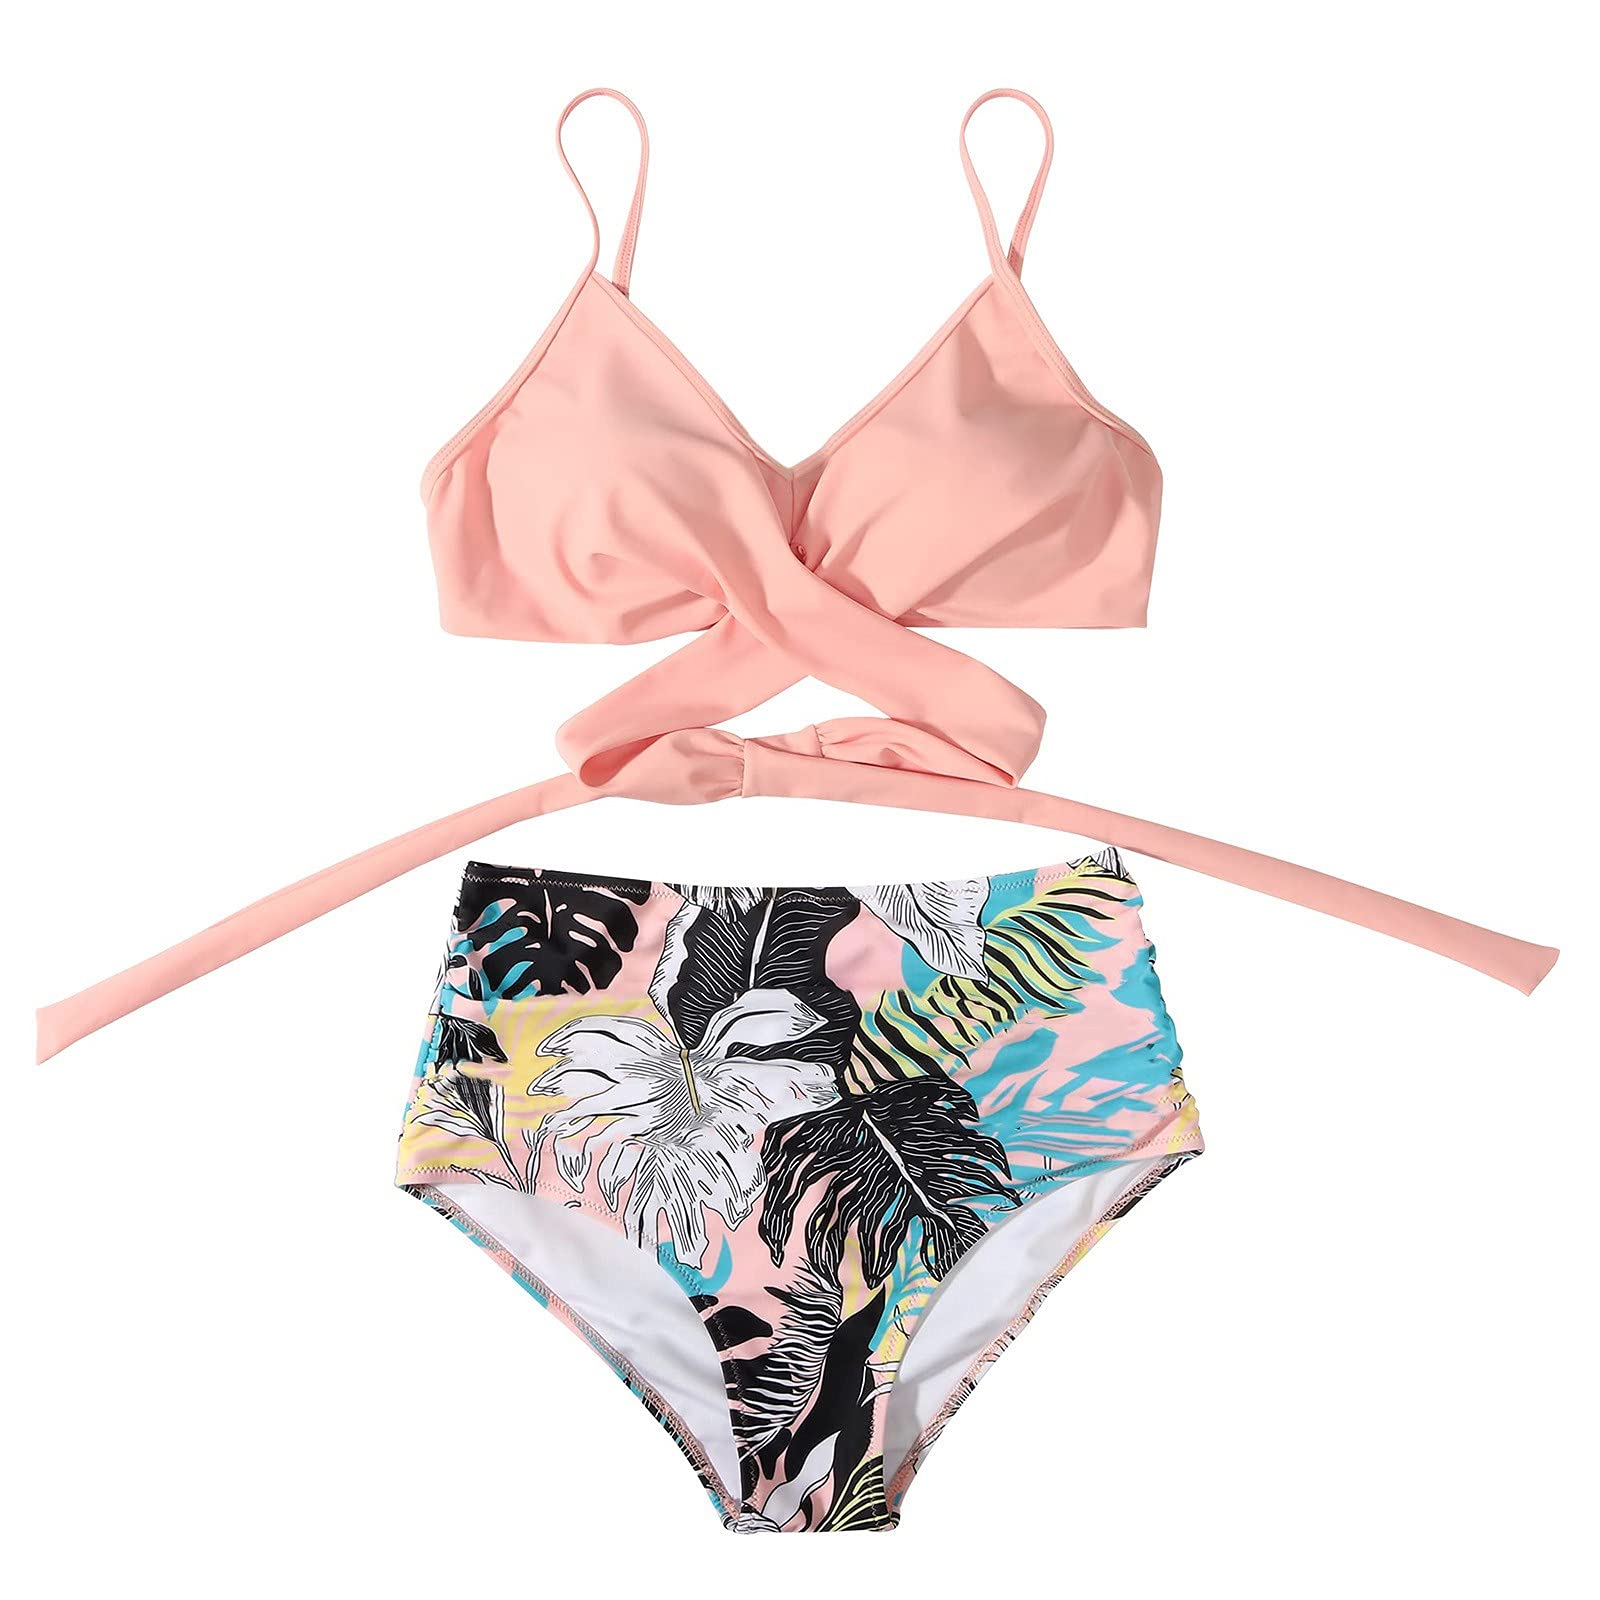 FMCHICO Women's High Waist Bikini Swimsuit Floral Print Tie Two Piece Bathing Suit